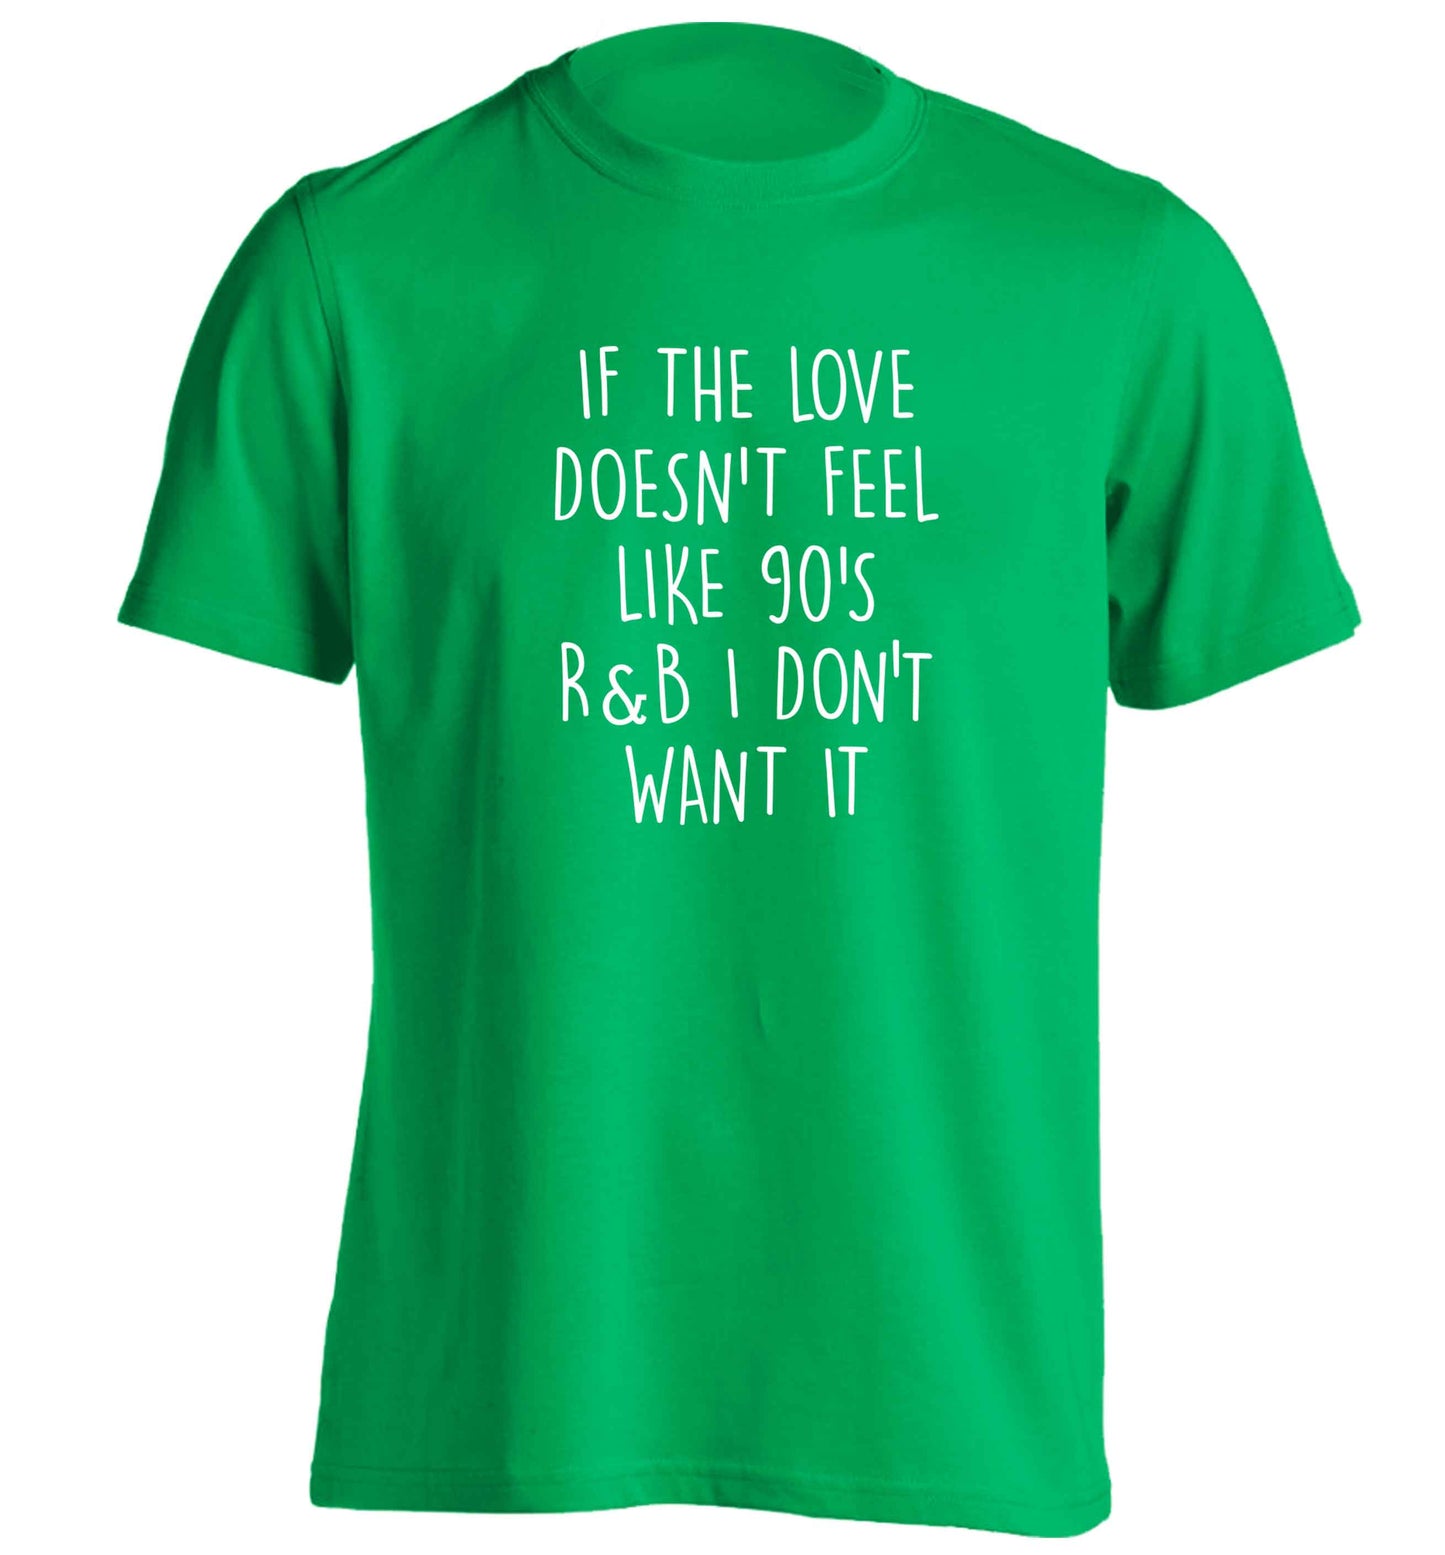 If the love doesn't feel like 90's r&b I don't want it adults unisex green Tshirt 2XL